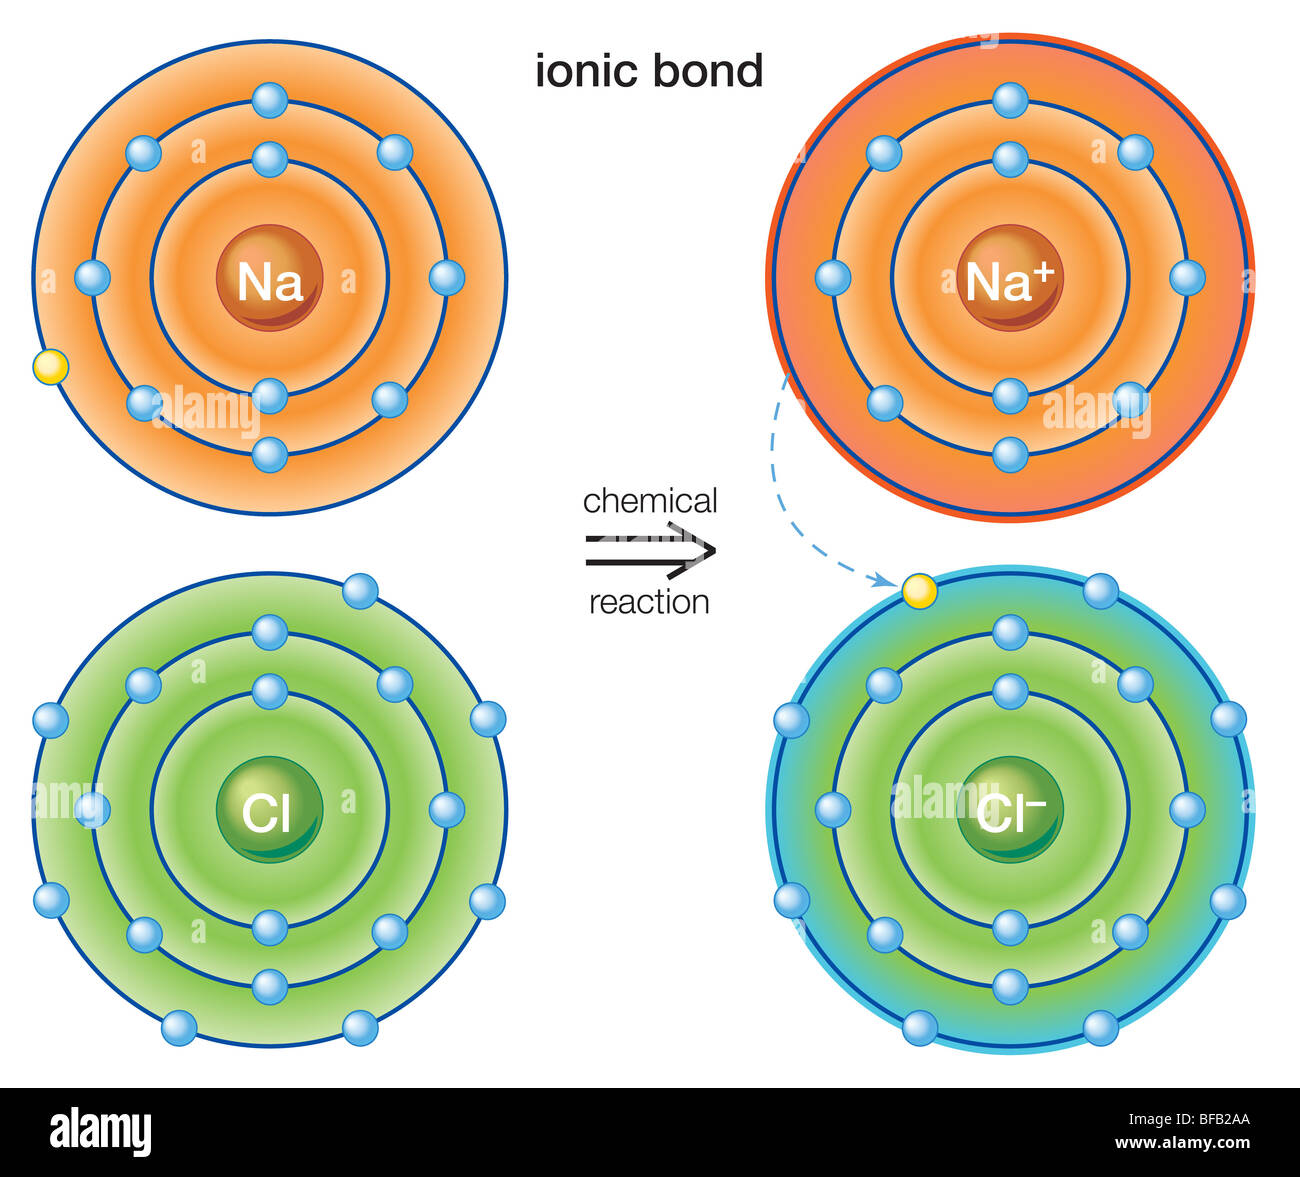 Bond ionic The Ionic